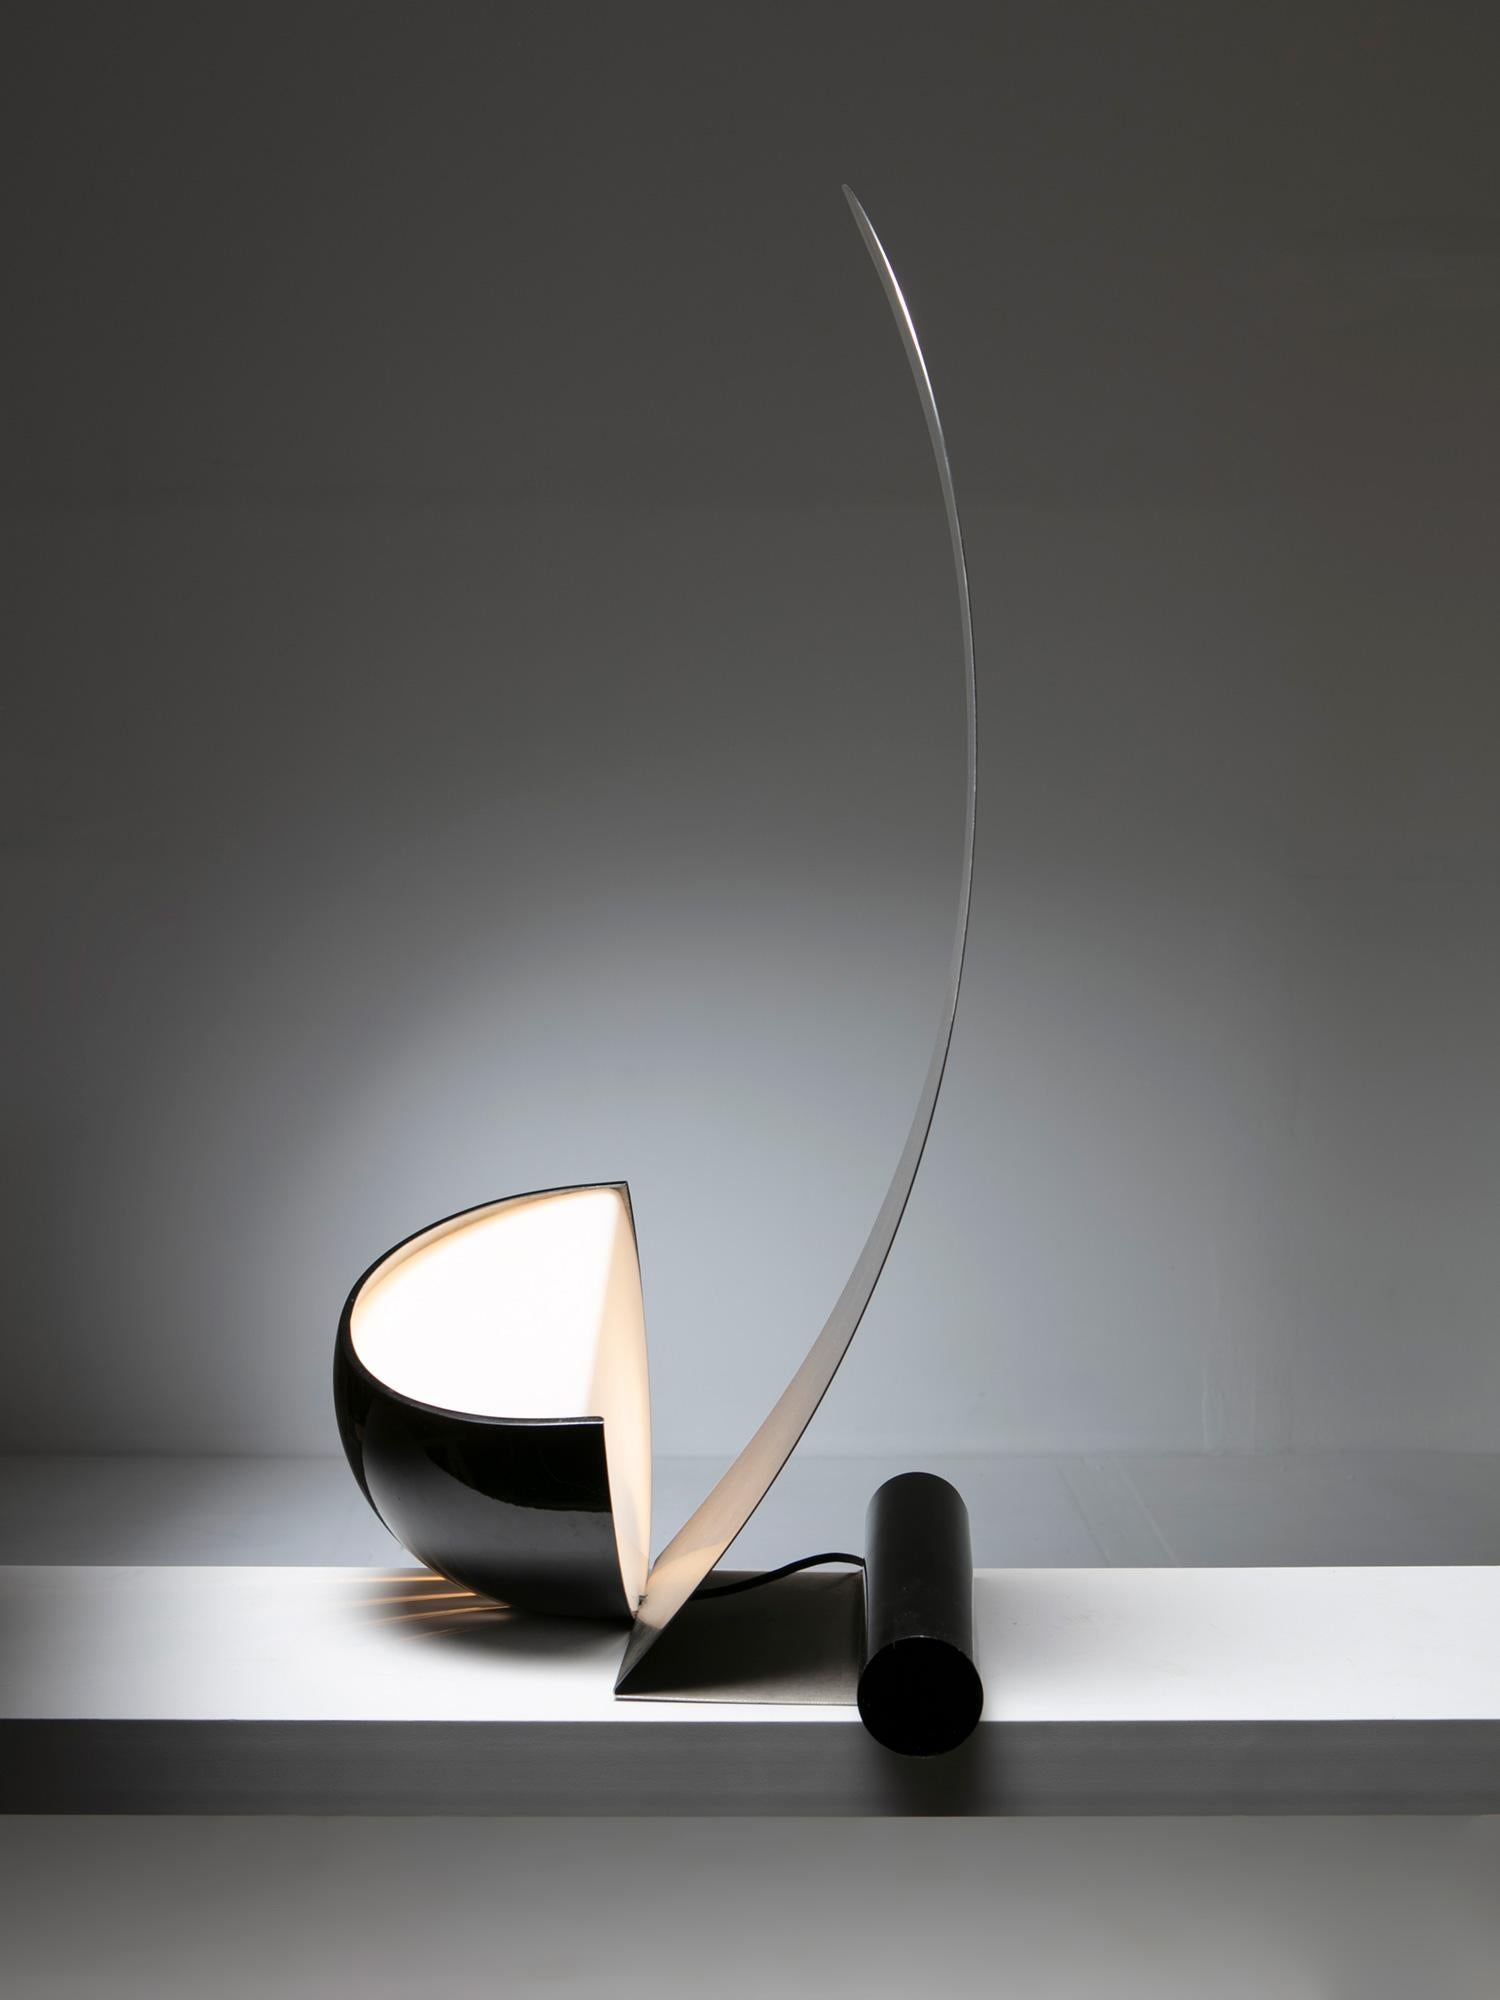 Sculptural Vela table lamp by Werner Krieger for Prestige.
Steel shade reflecting the hidden light source hidden in the black metal shell.